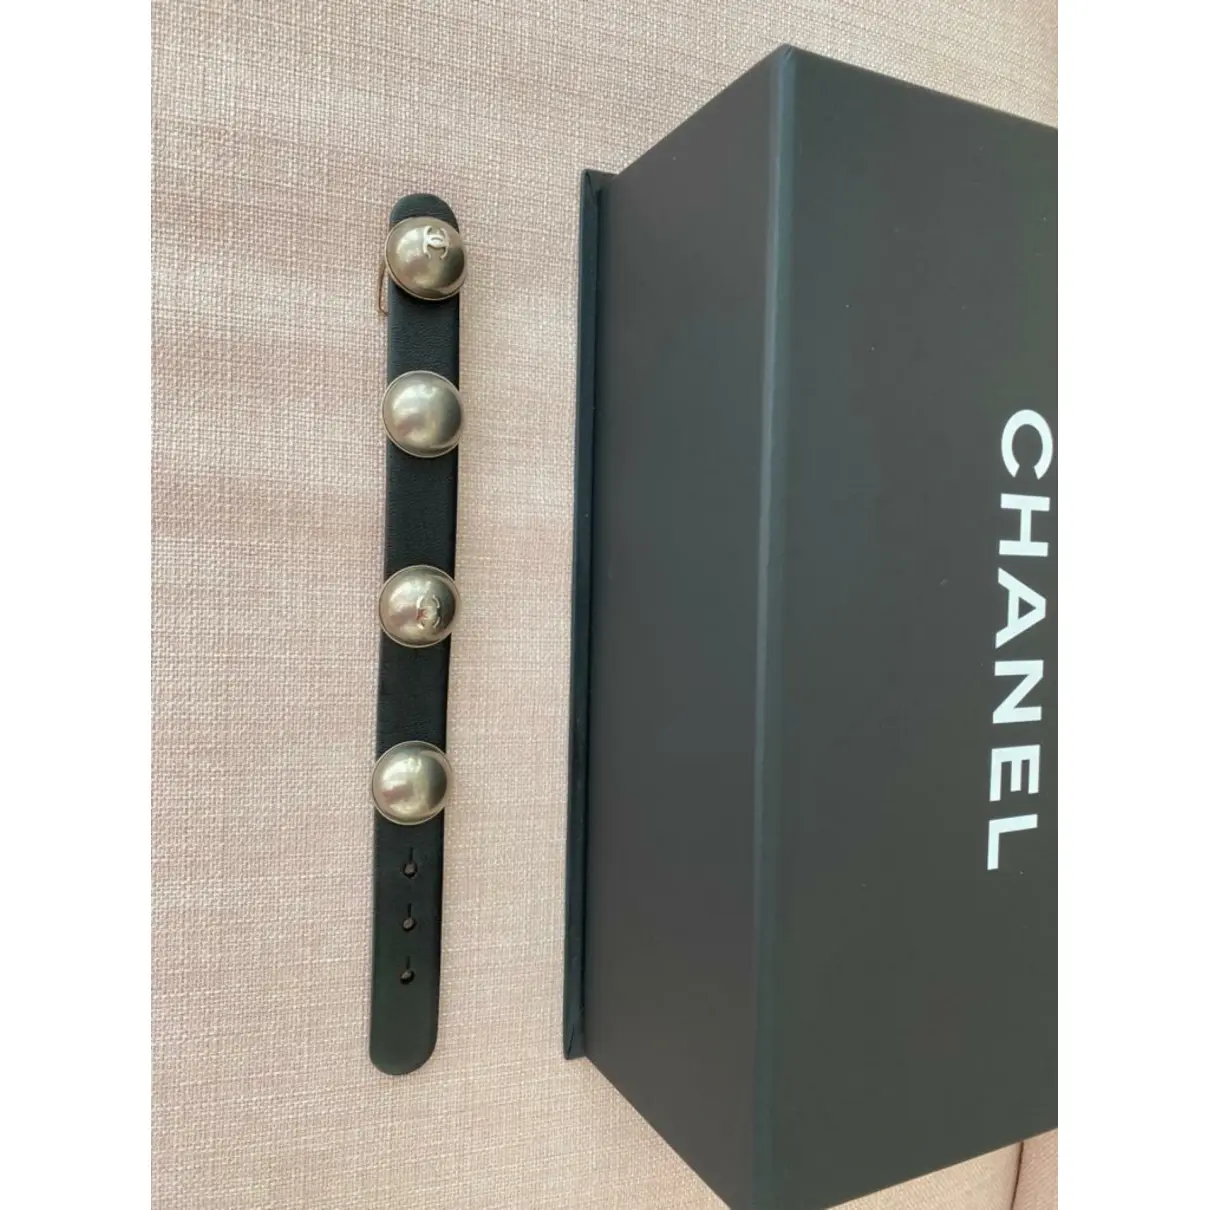 Buy Chanel Leather bracelet online